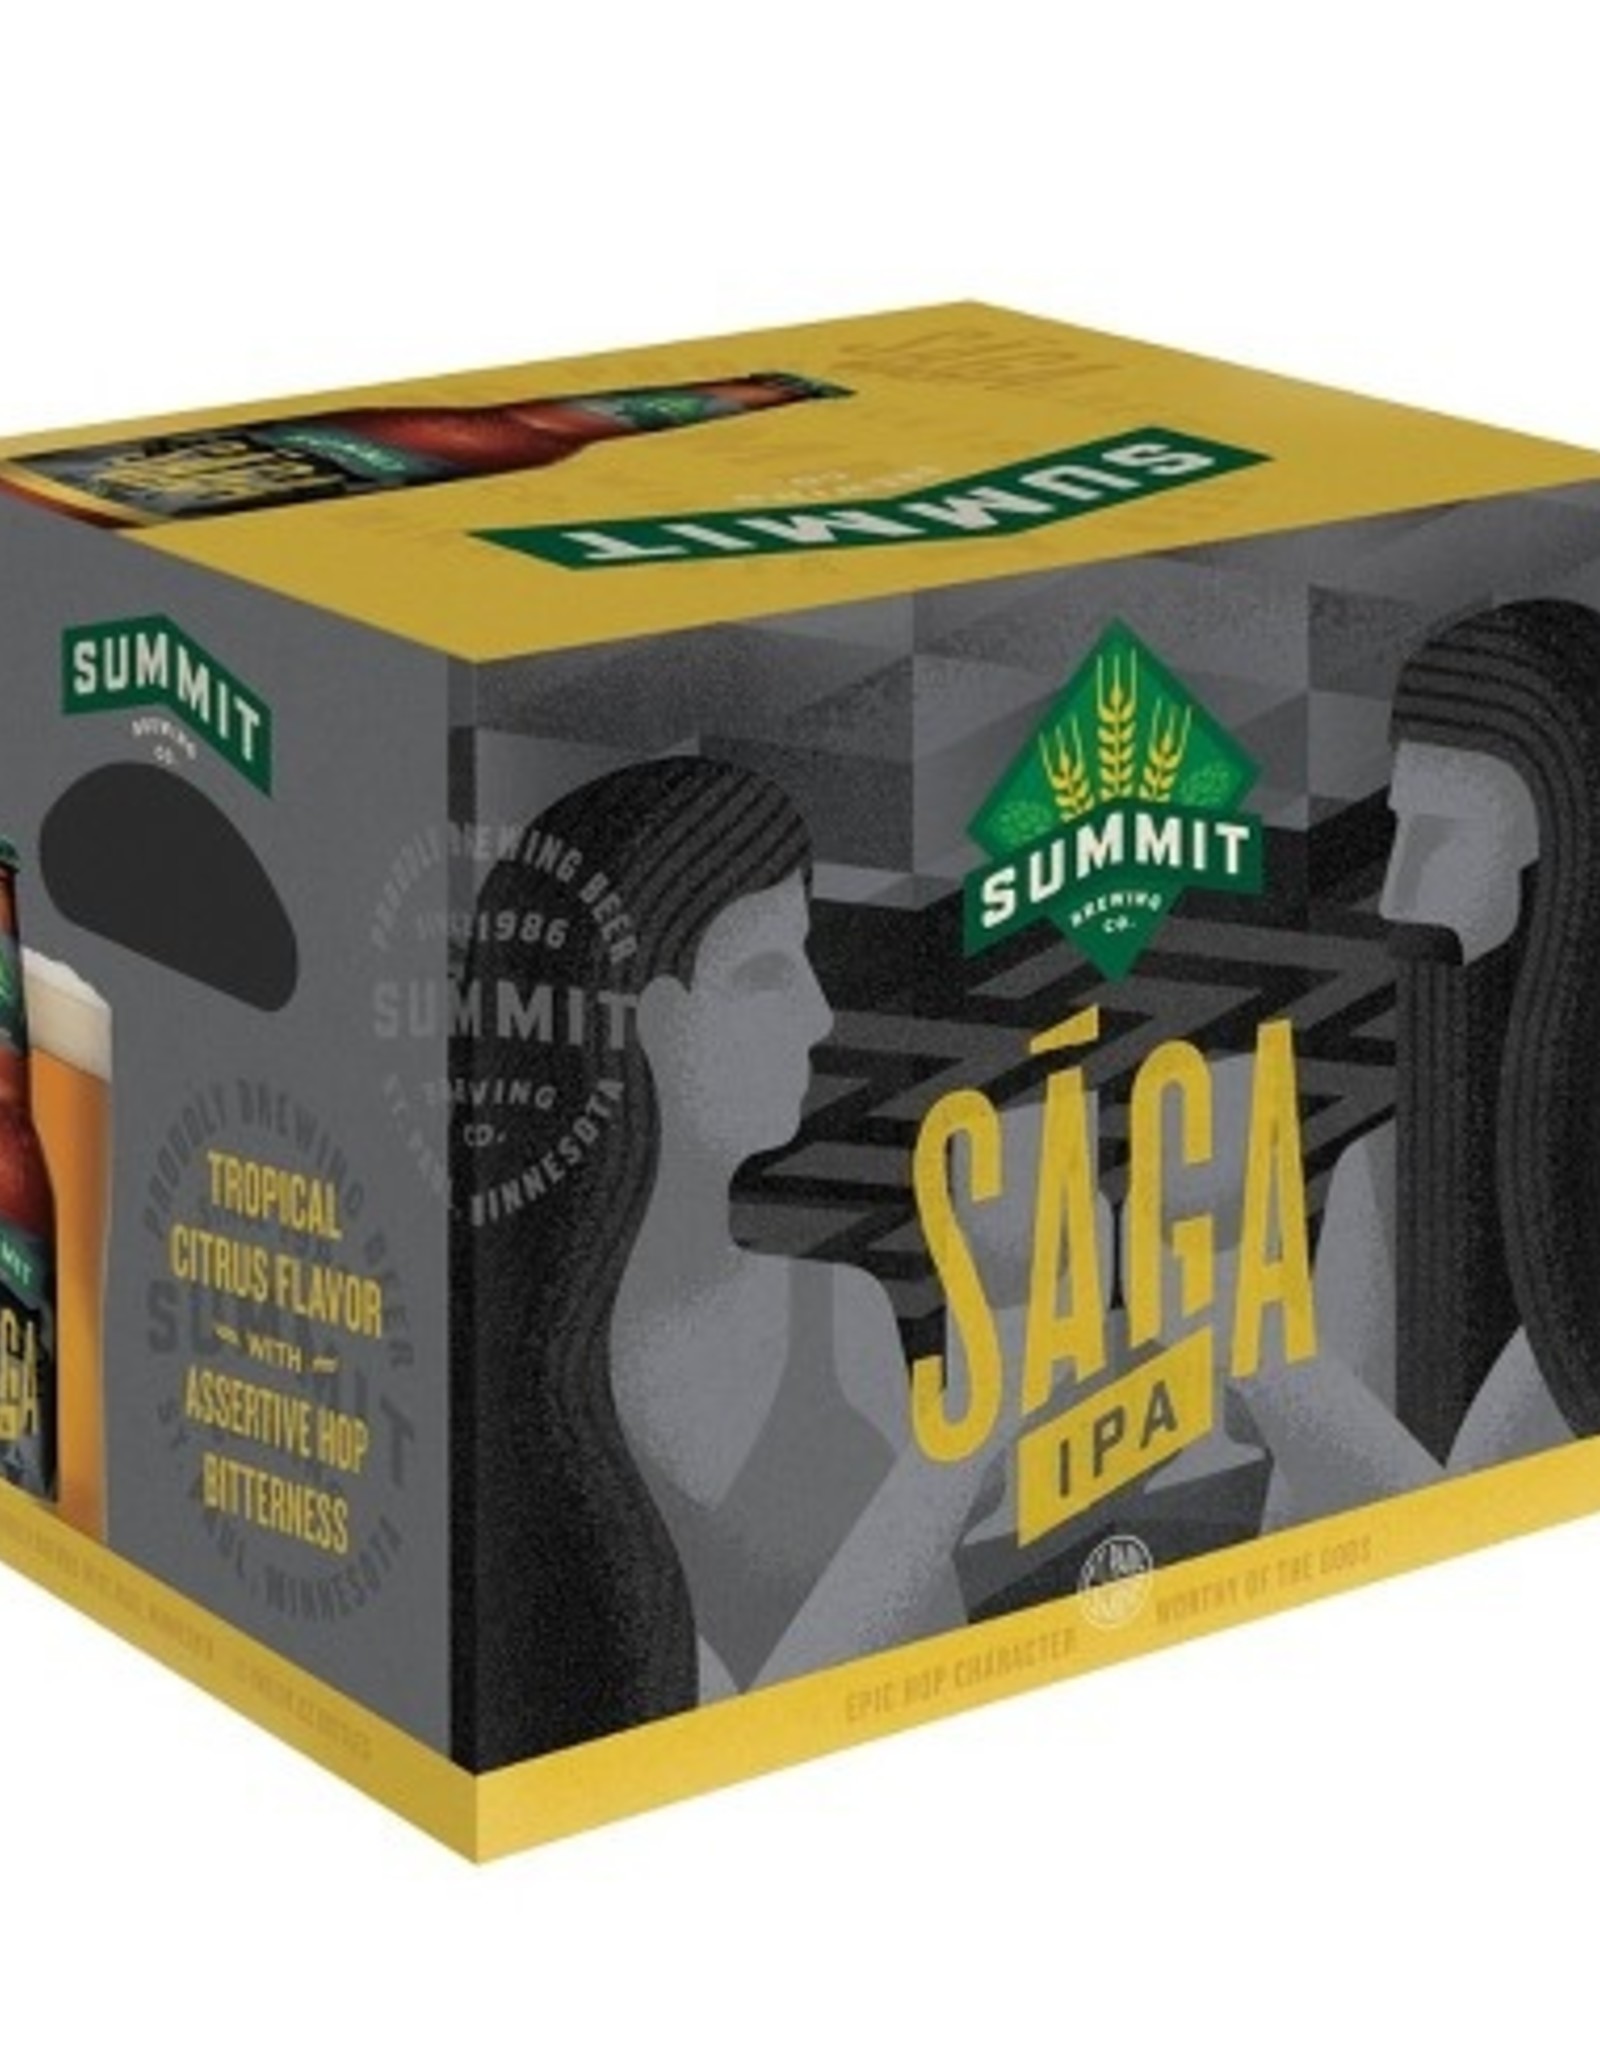 Summit Saga IPA 12x12 oz bottles